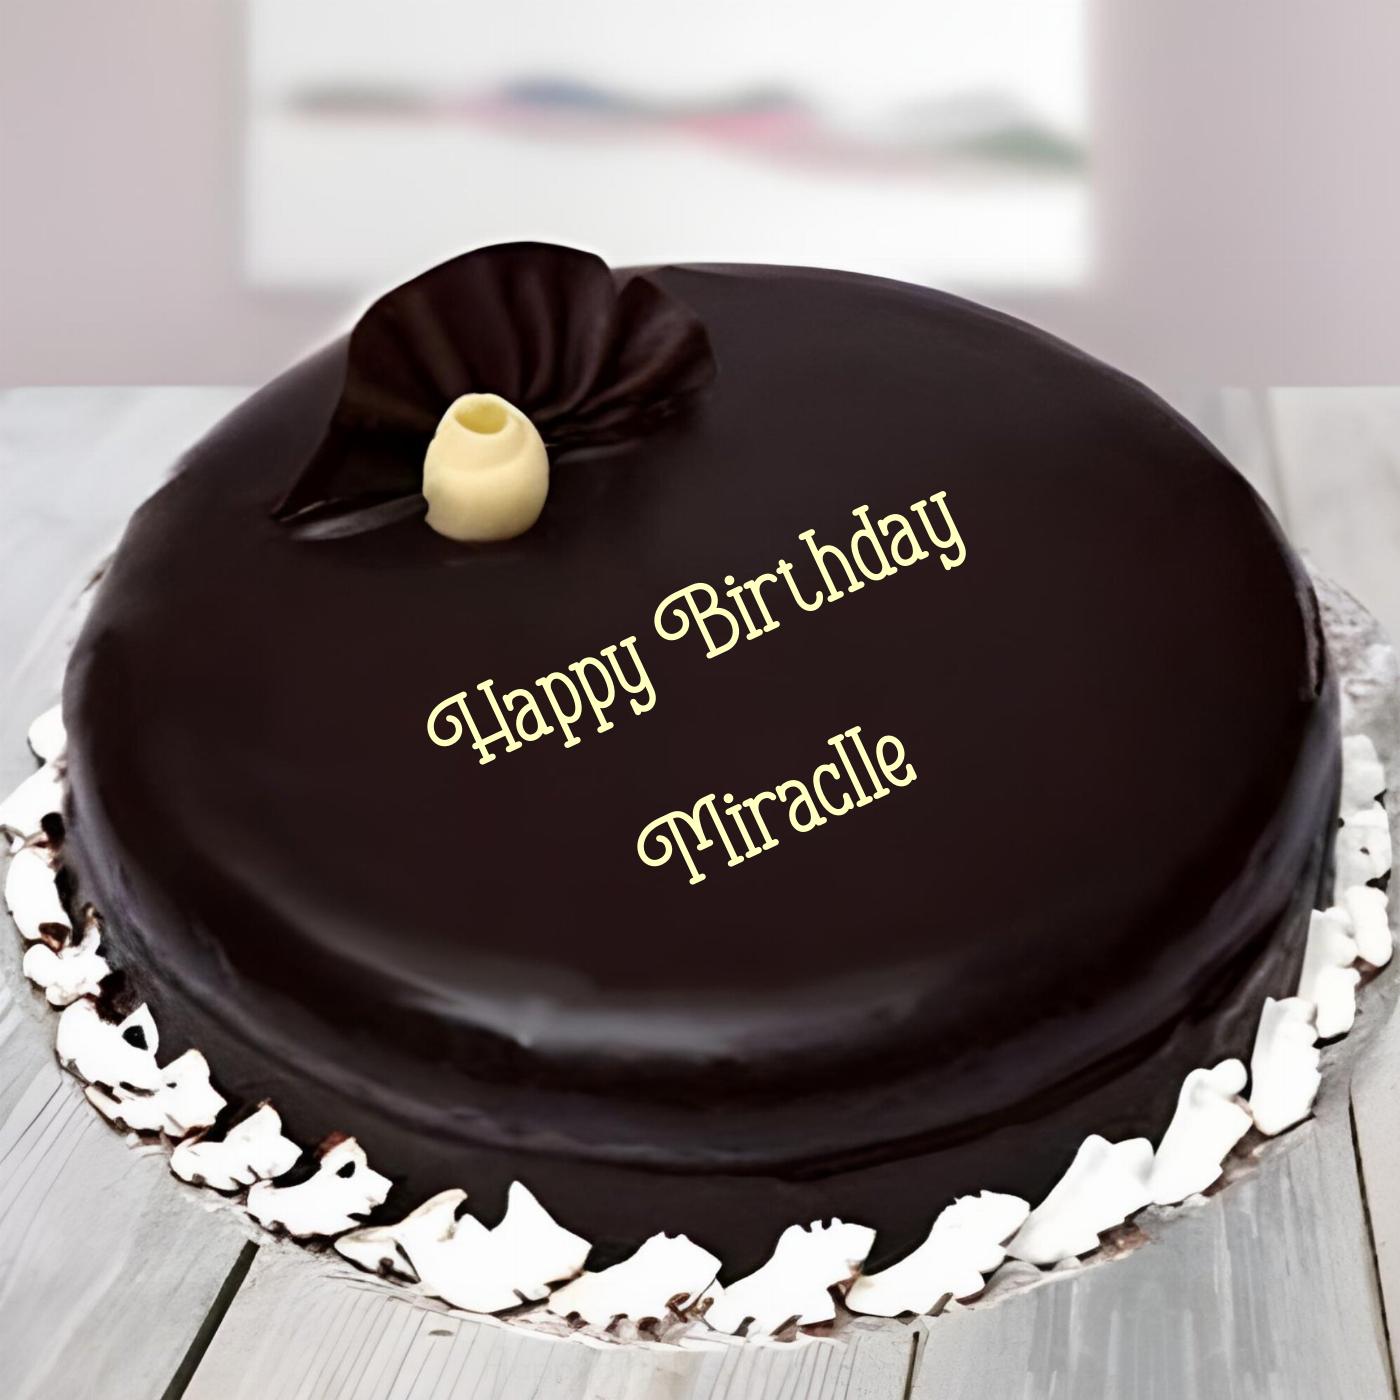 Happy Birthday Miraclle Beautiful Chocolate Cake